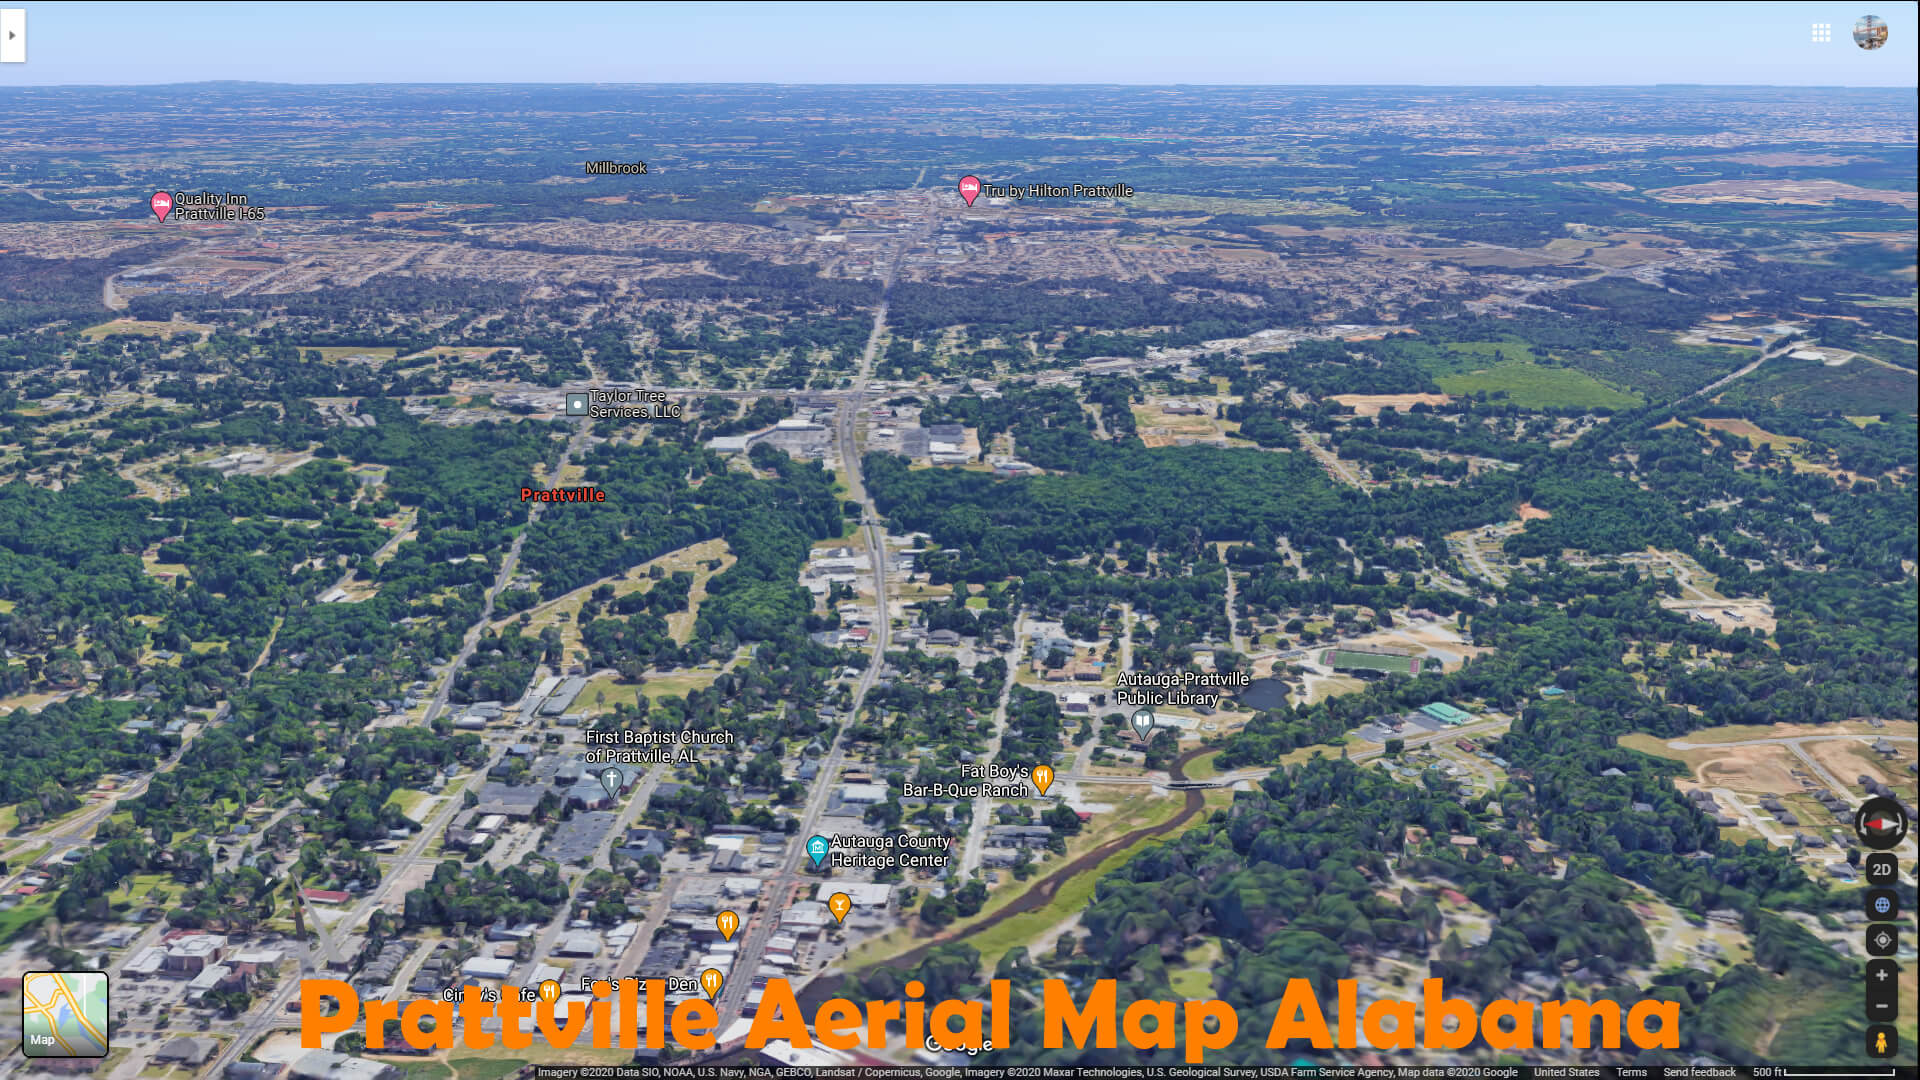 Prattville Aerial Map Alabama